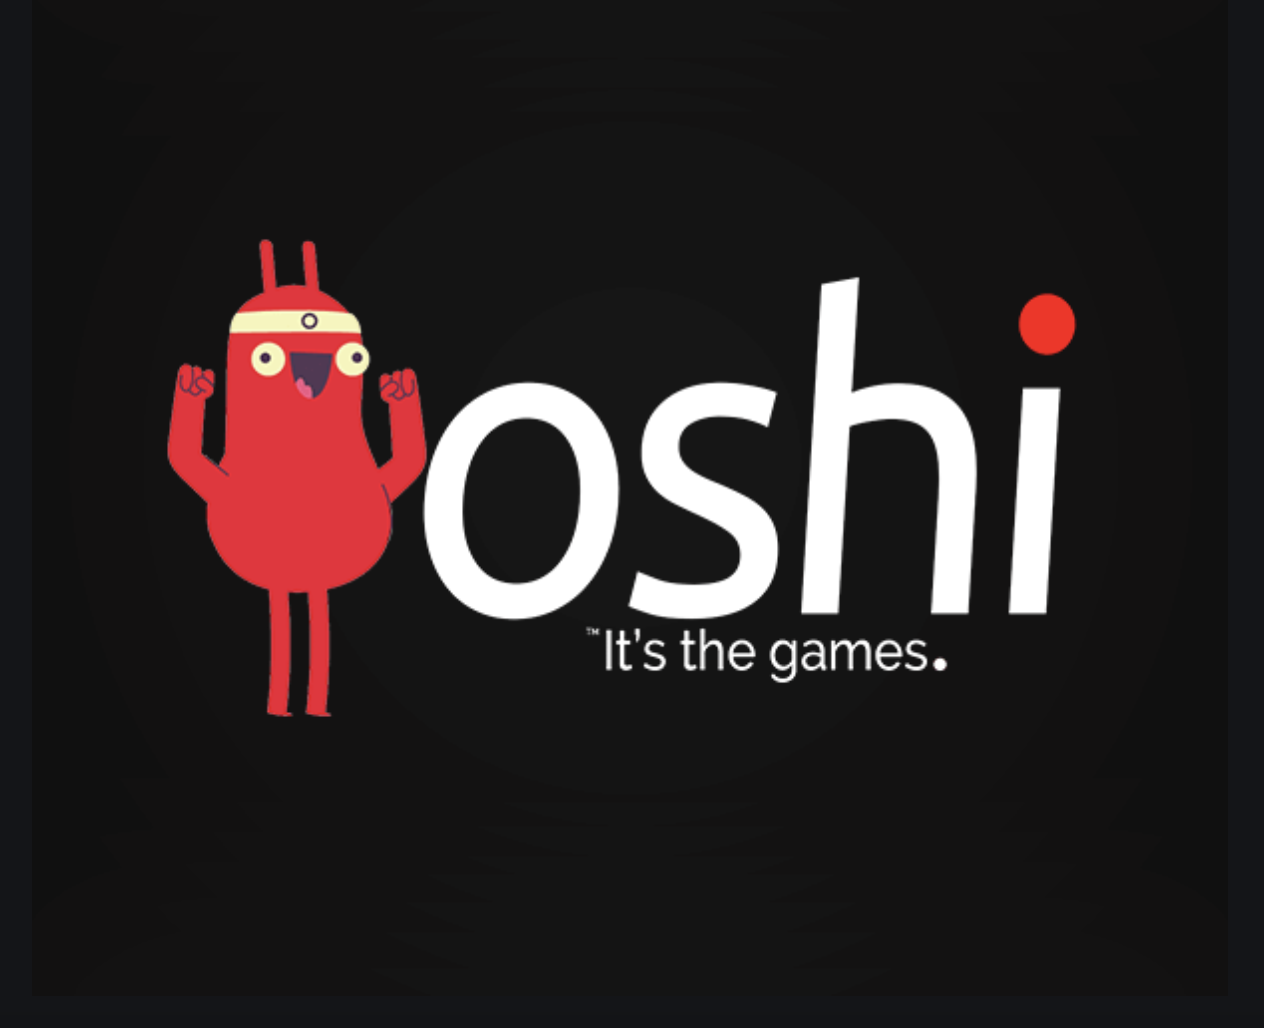 Oshi Casino Promo Code